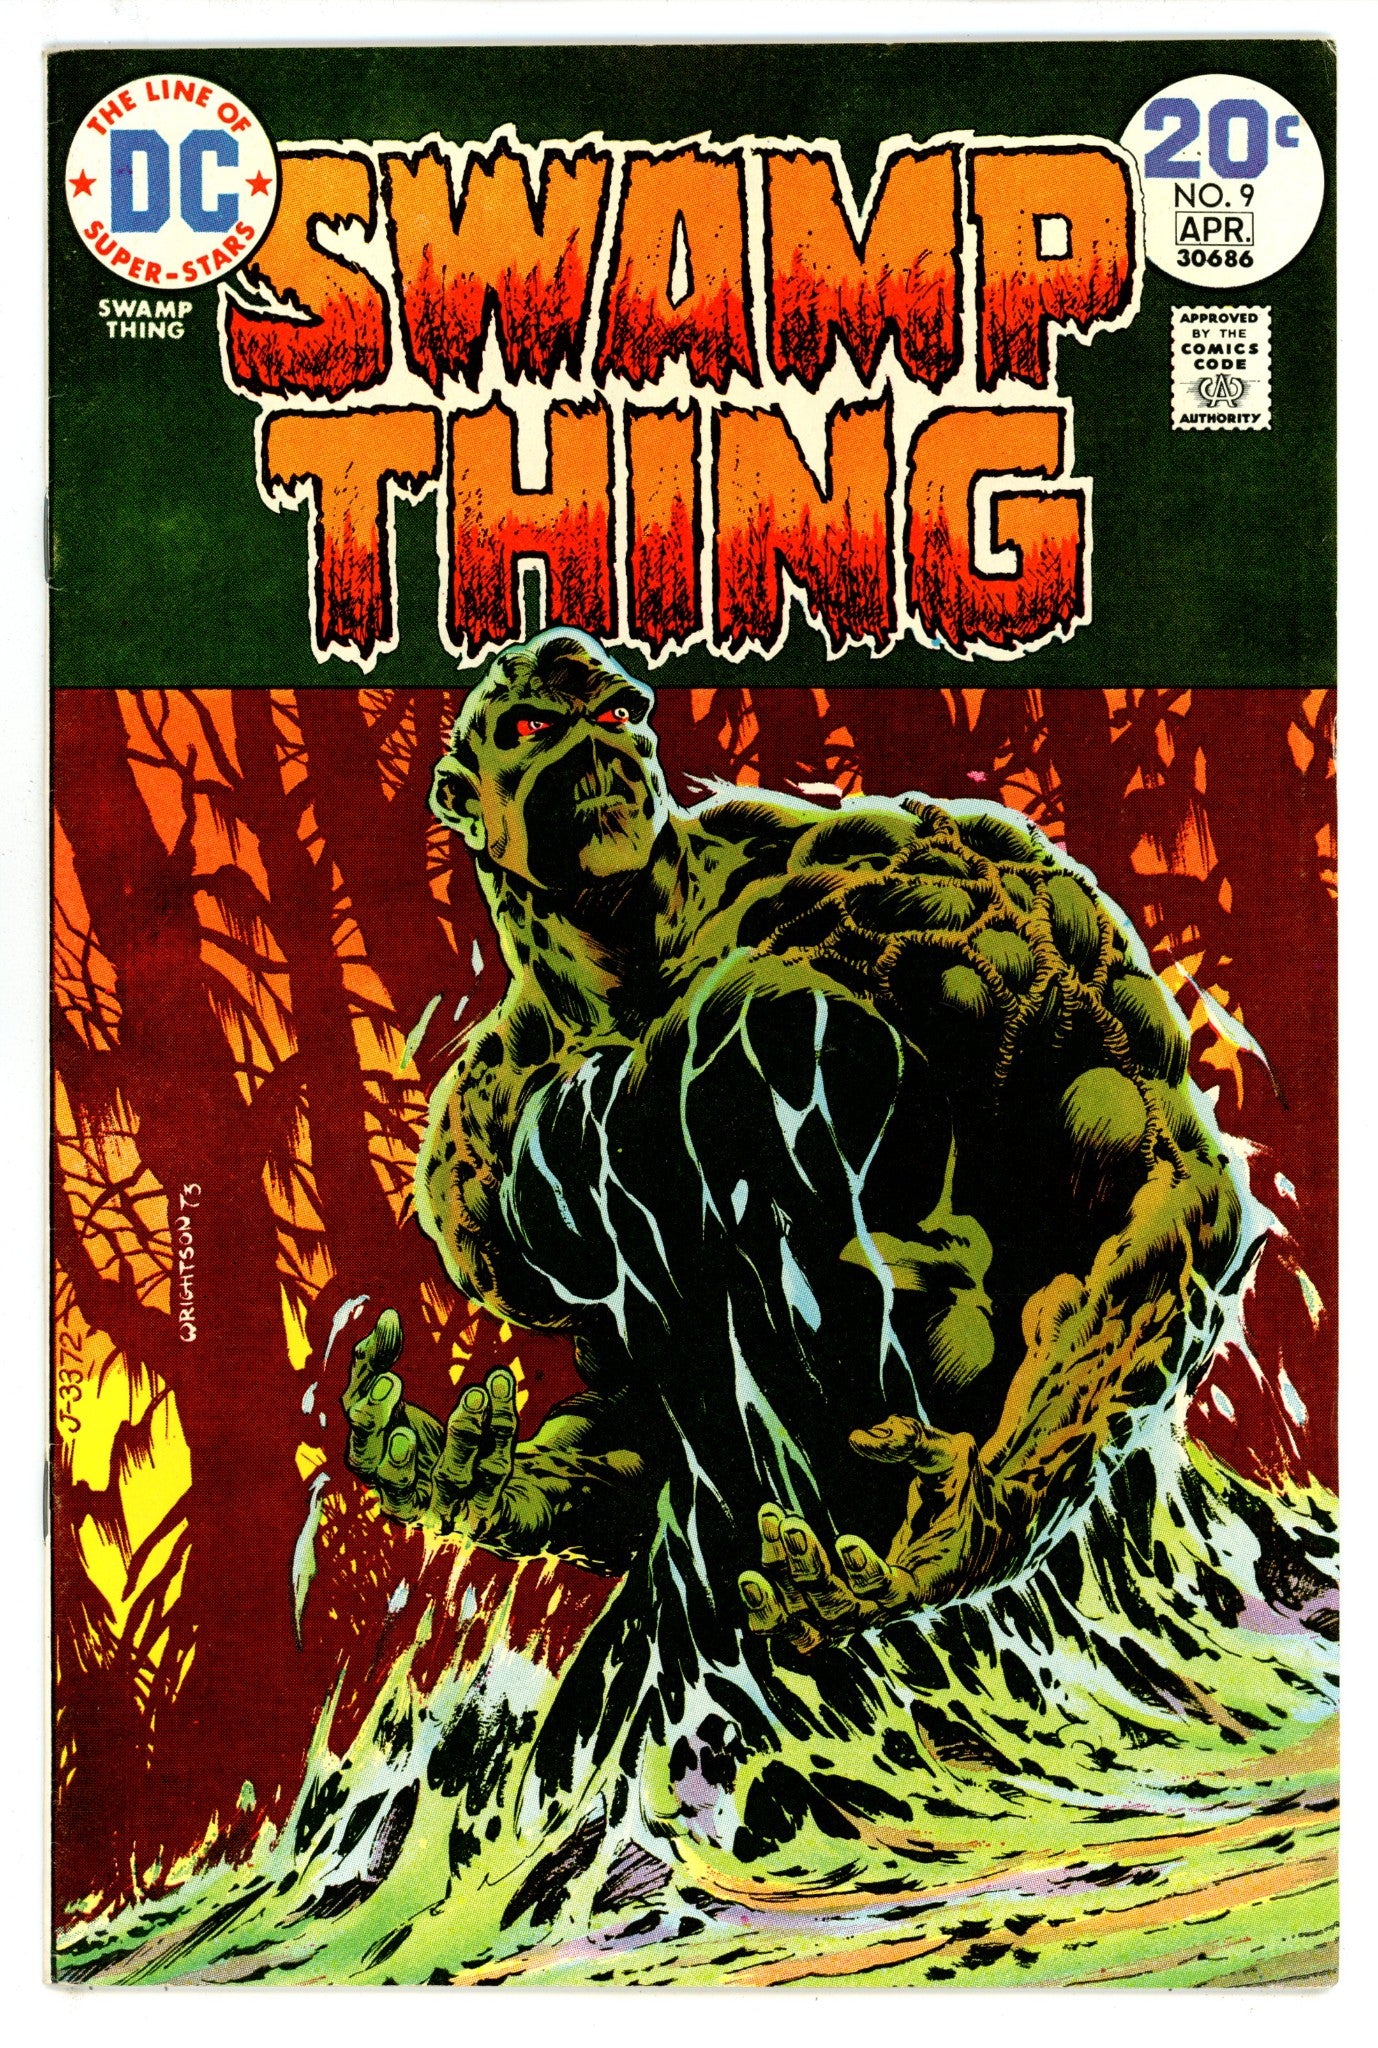 Swamp Thing Vol 1 9 FN/VF (7.0) (1974) 